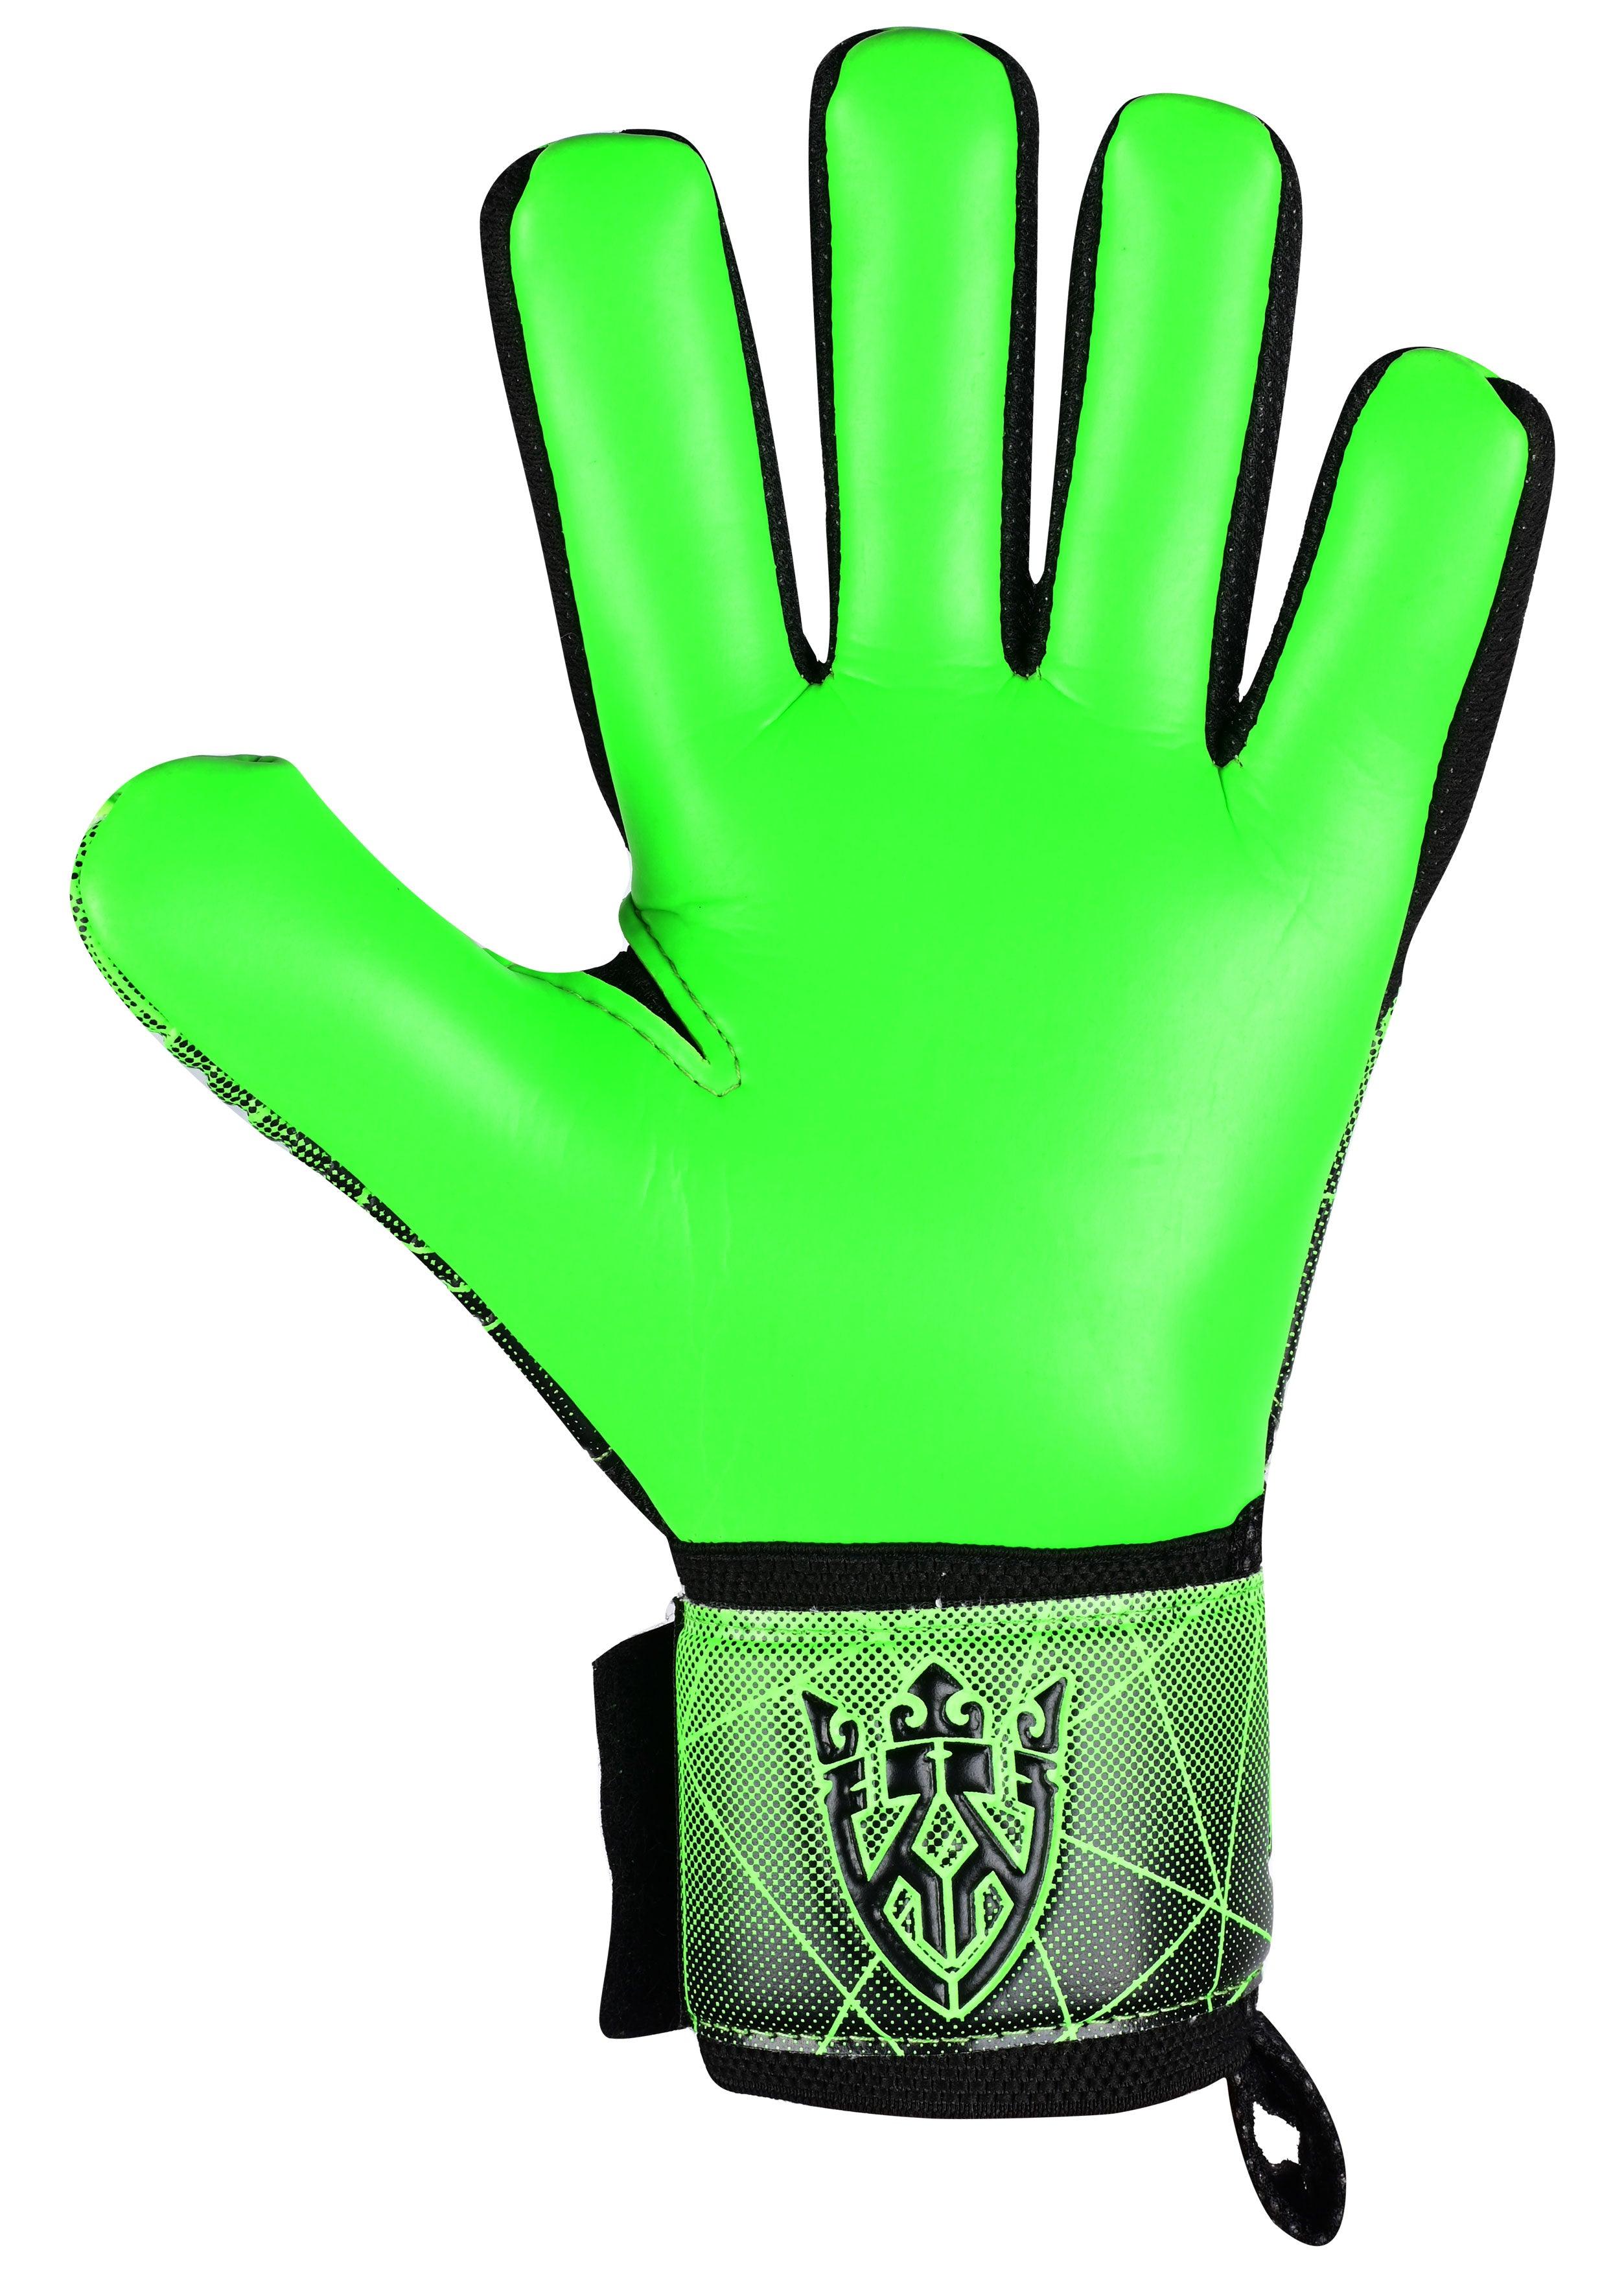 ALPHA GREEN WITH FINGERSAVE goalkeeper gloves